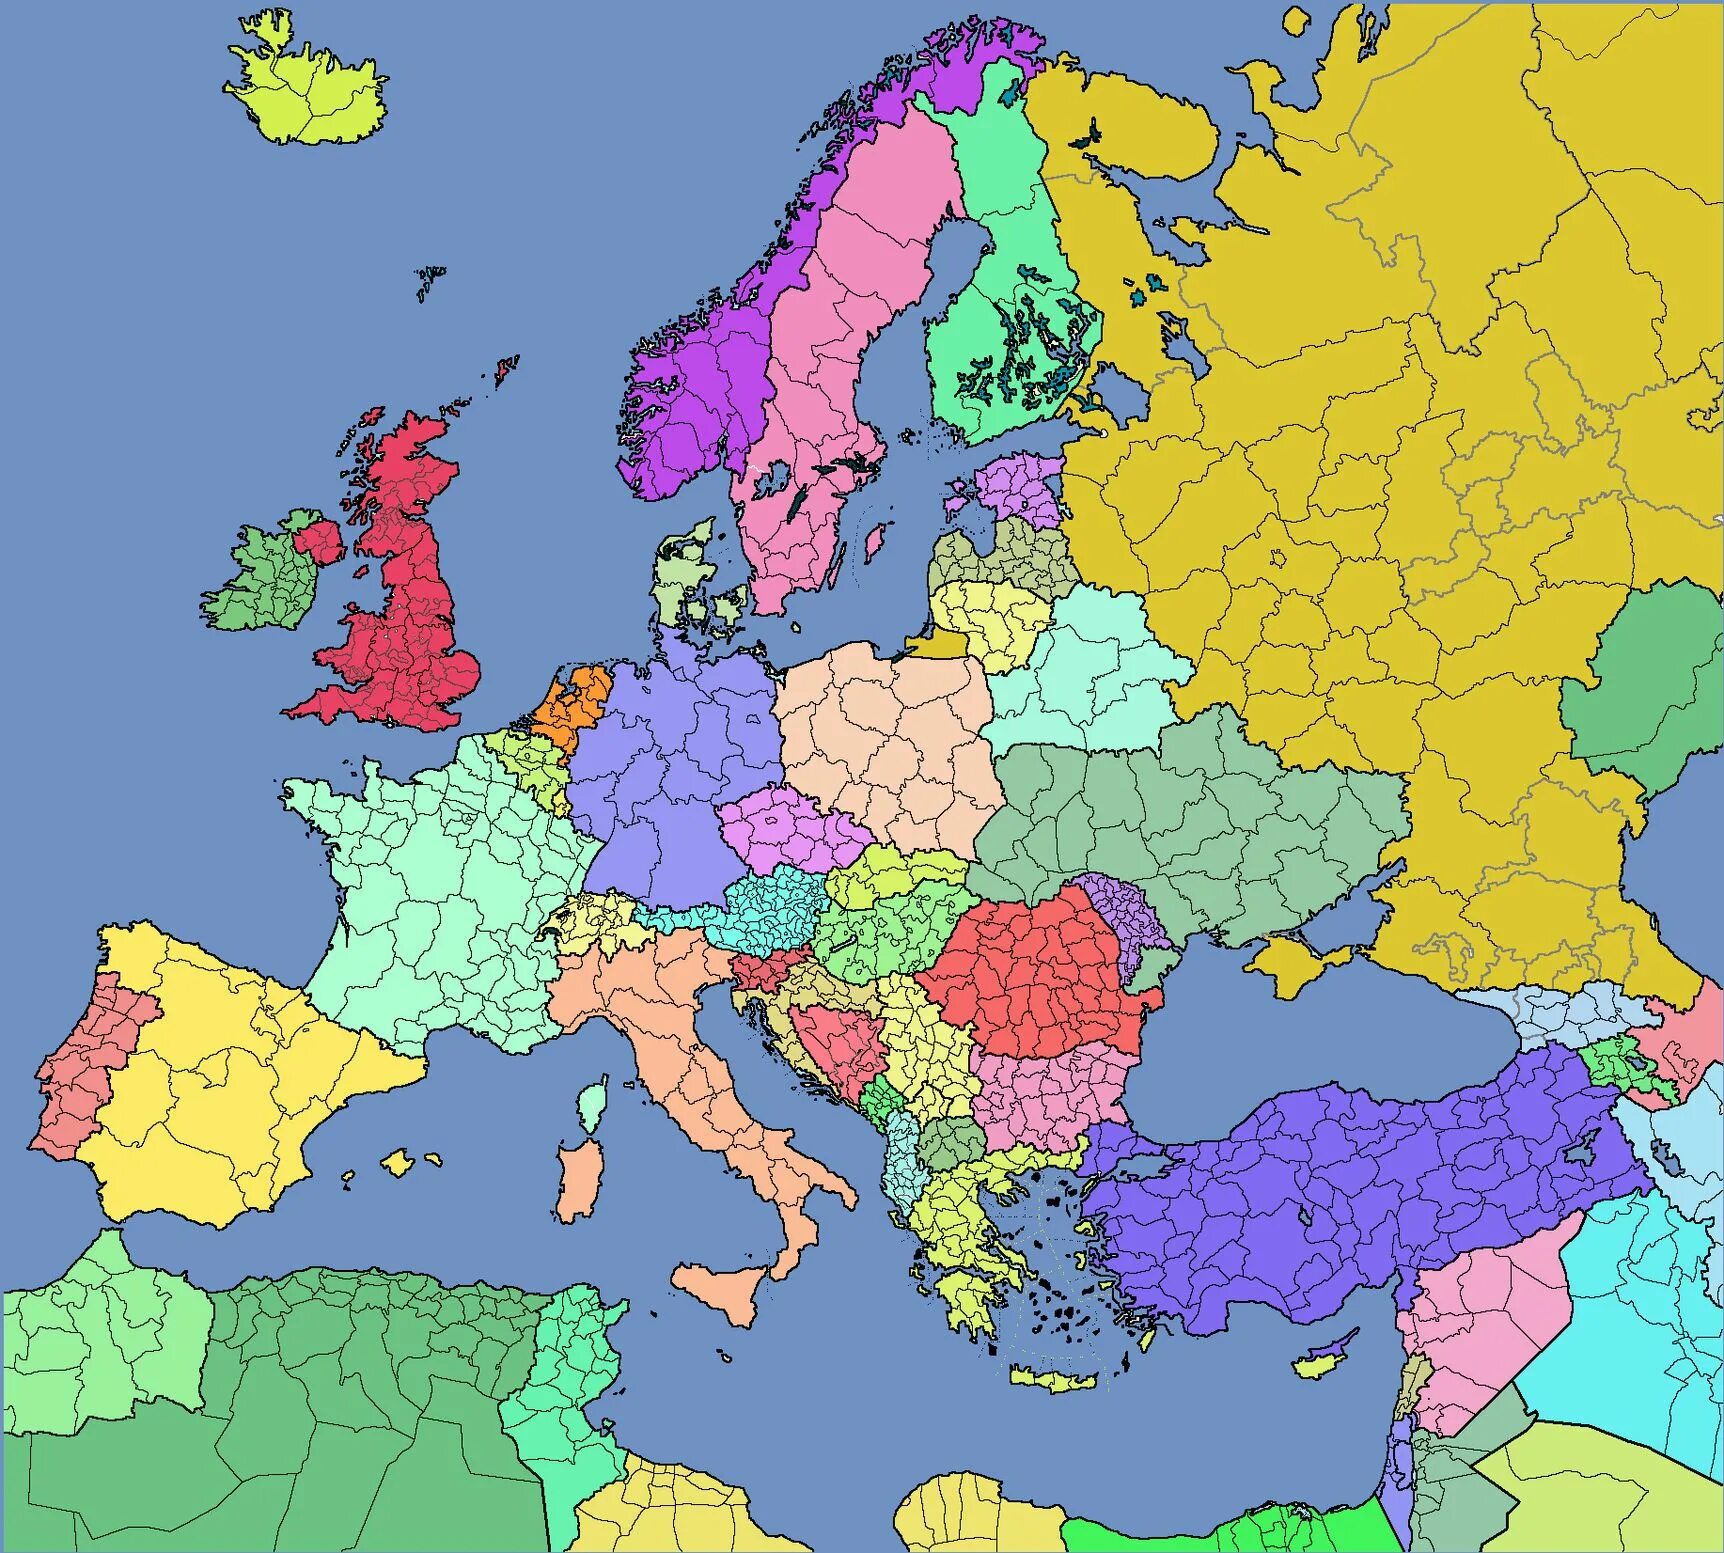 Maps for mapping. Карта Европы 1936 для ВПИ. Blank Map of Europe 1914. Карта Европы 1939 альтернативная. Политическая карта Европы 2014.